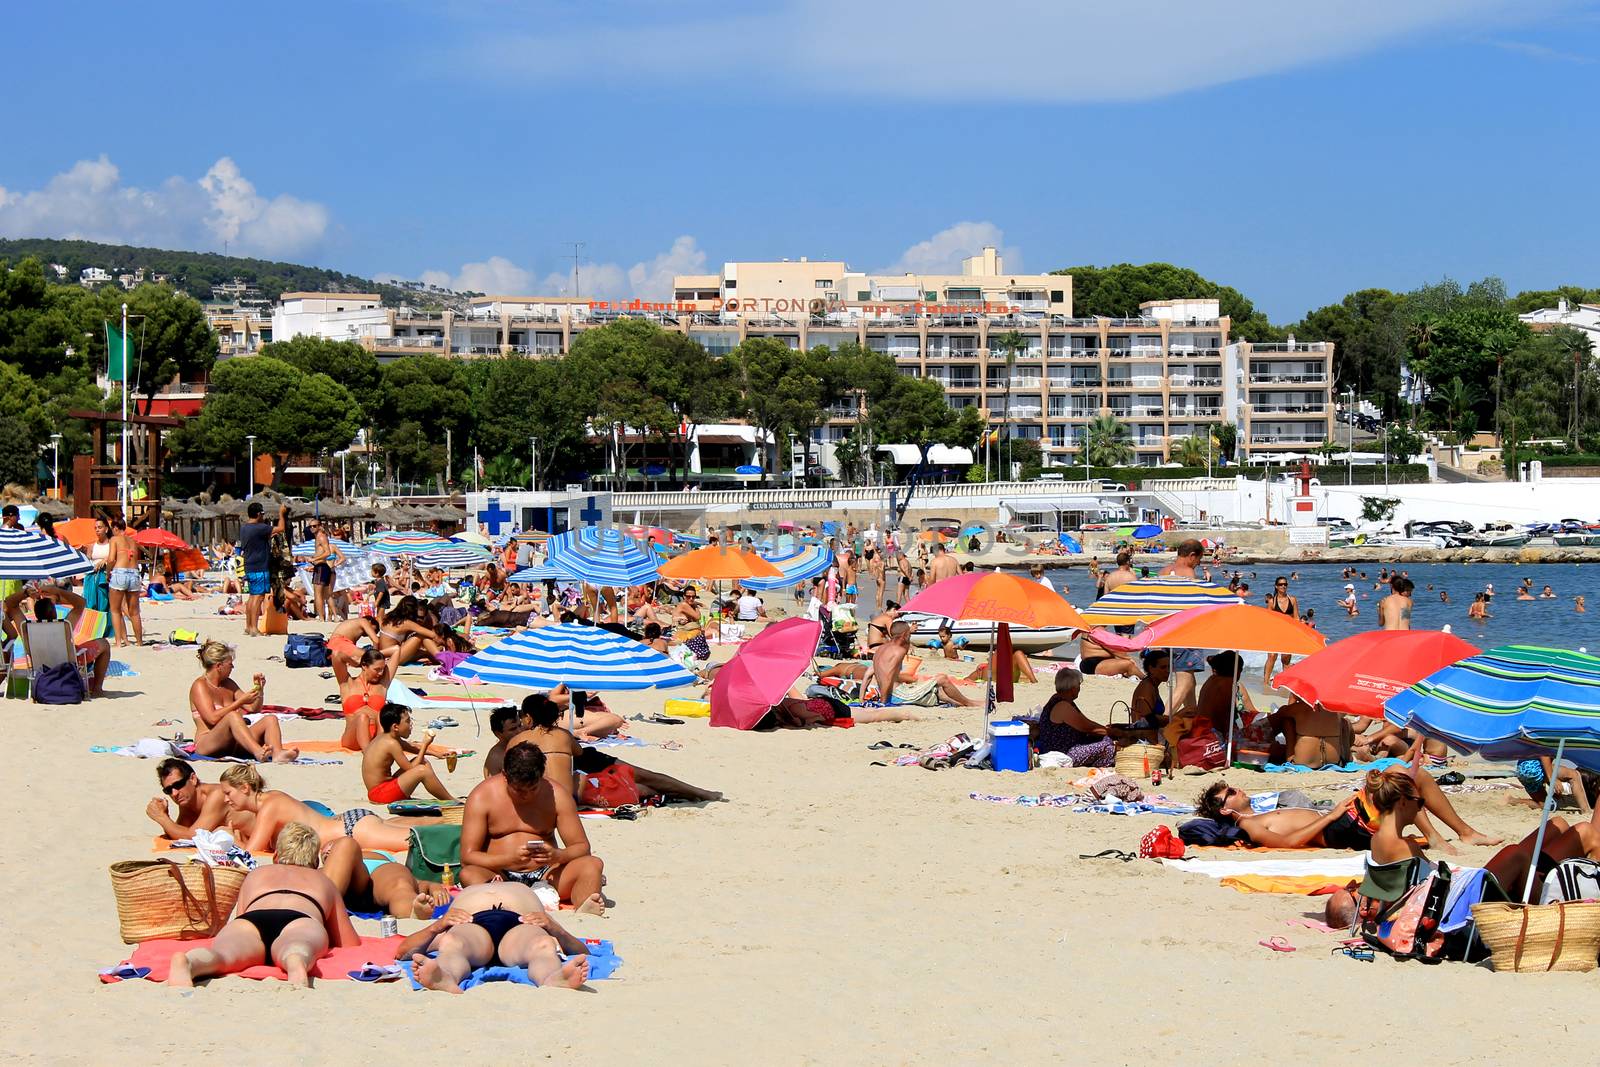 PALMA NOVA BEACH, MAJORCA, SPAIN - 24th August 2015: Palma Nova beach resort on the 24th August 2015. This is a popular and established tourist destination every summer.